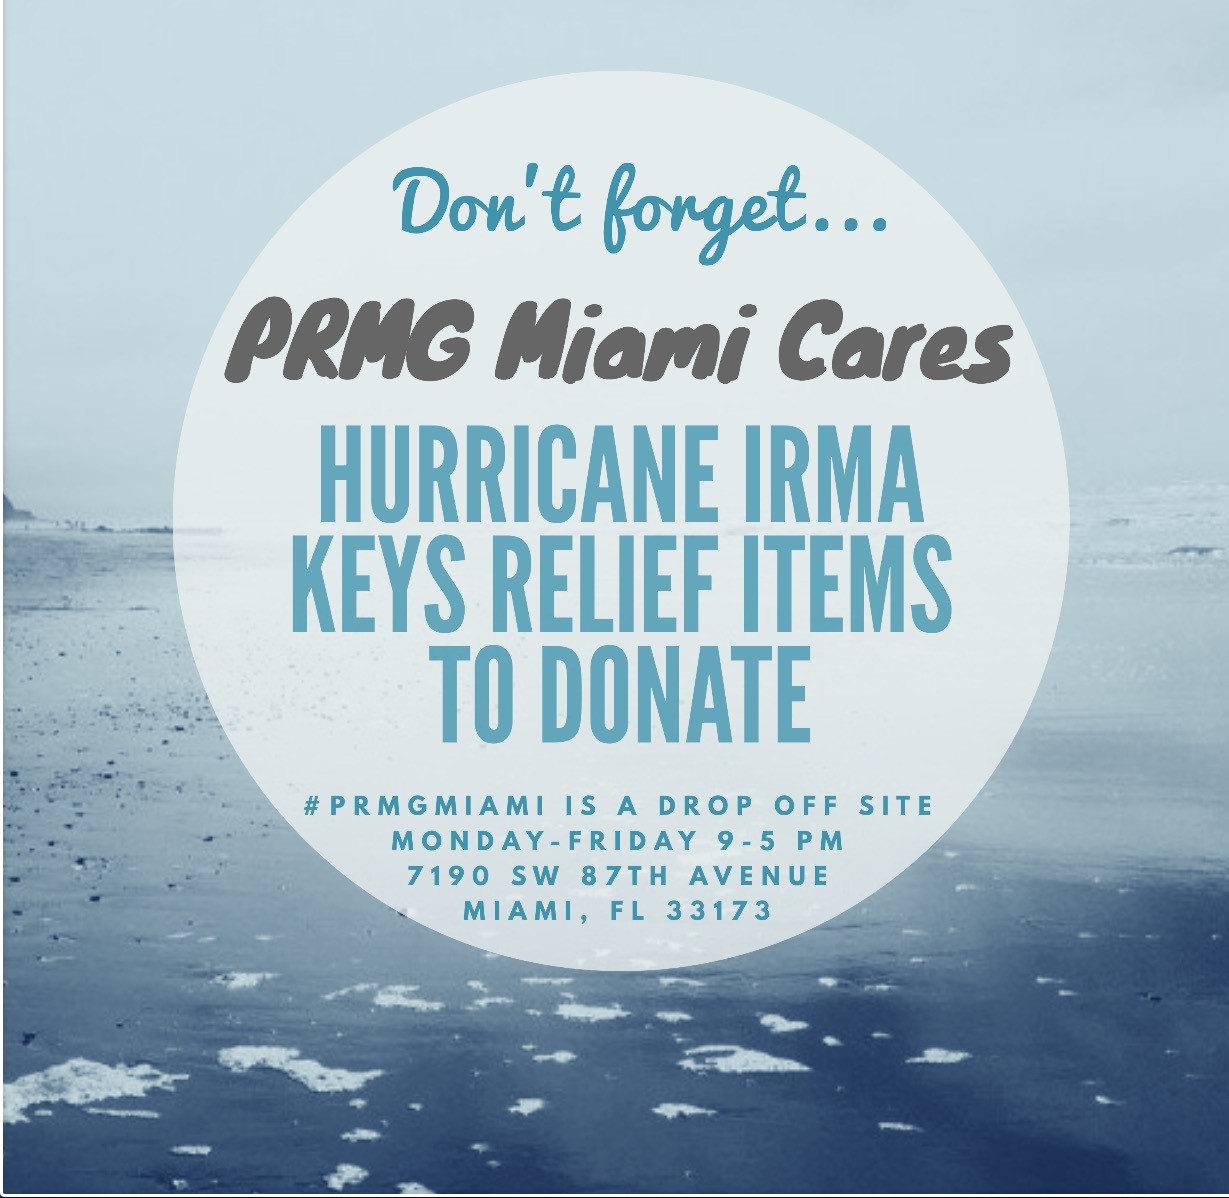 PRMG Miami: Hurricane Relief Efforts